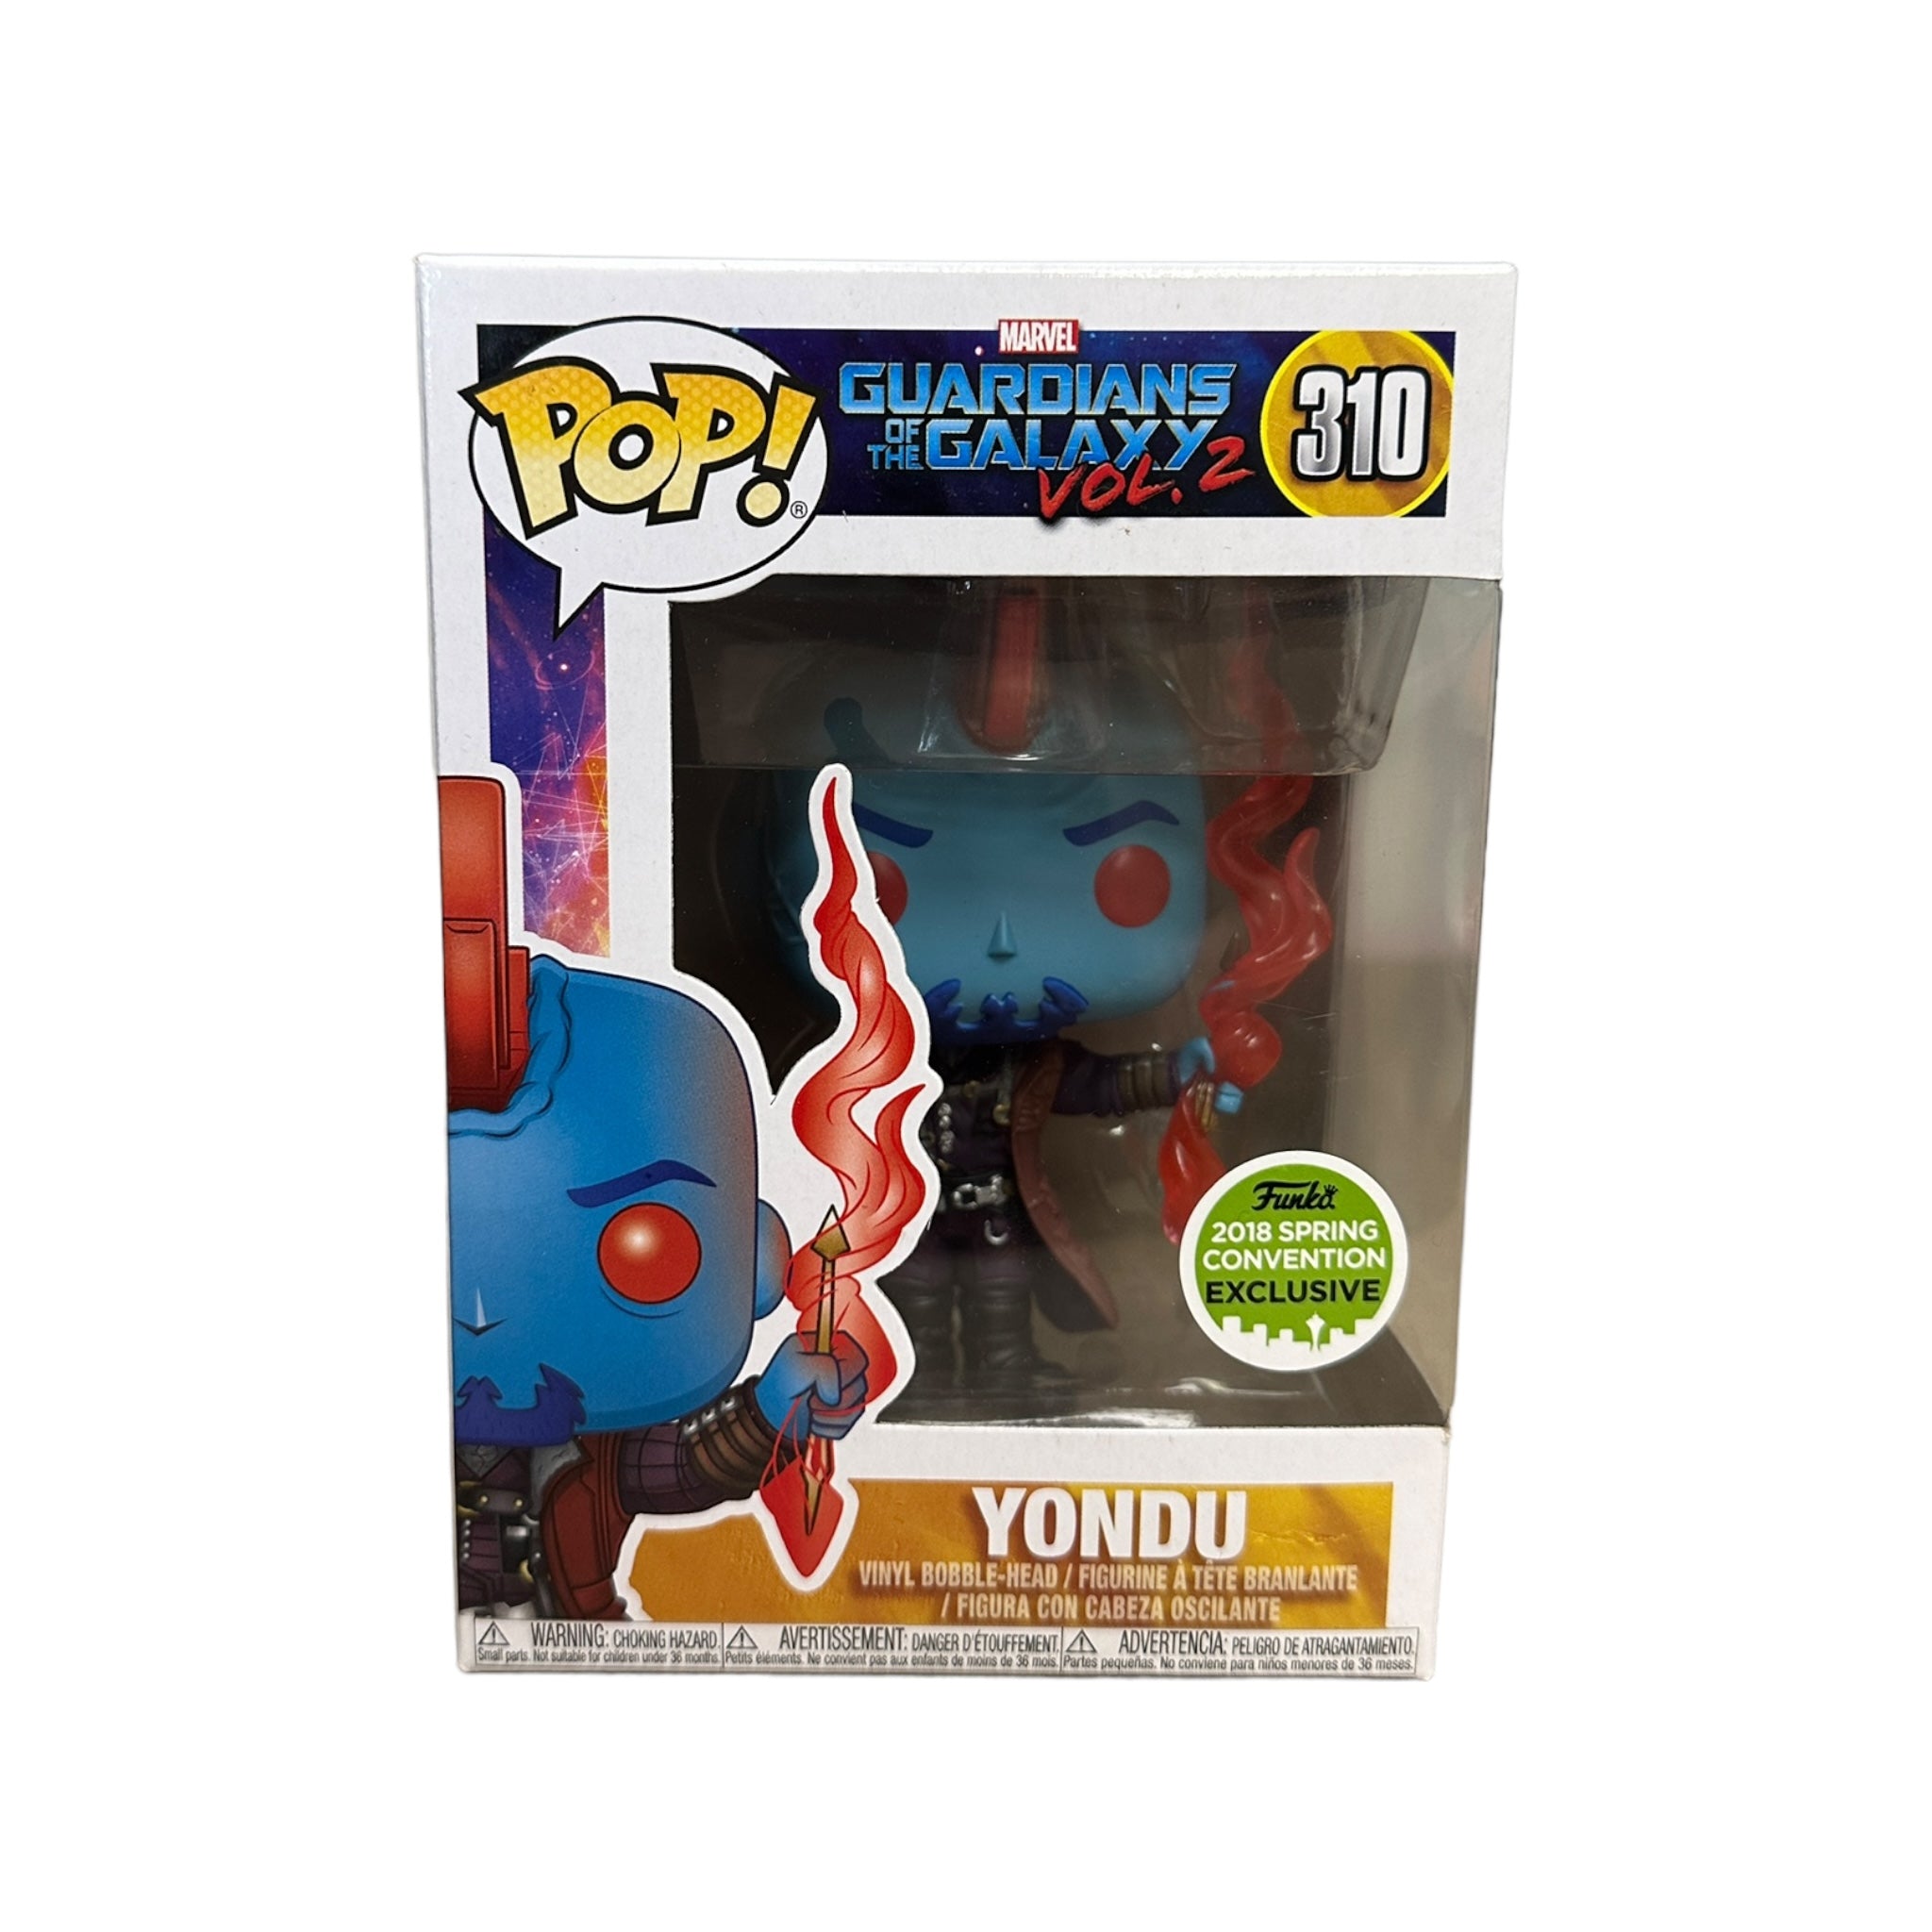 Yondu #310 (Yaka Arrow) Funko Pop! - Guardians of The Galaxy Vol. 2 - ECCC 2018 Shared Exclusive - Condition 8.5/10